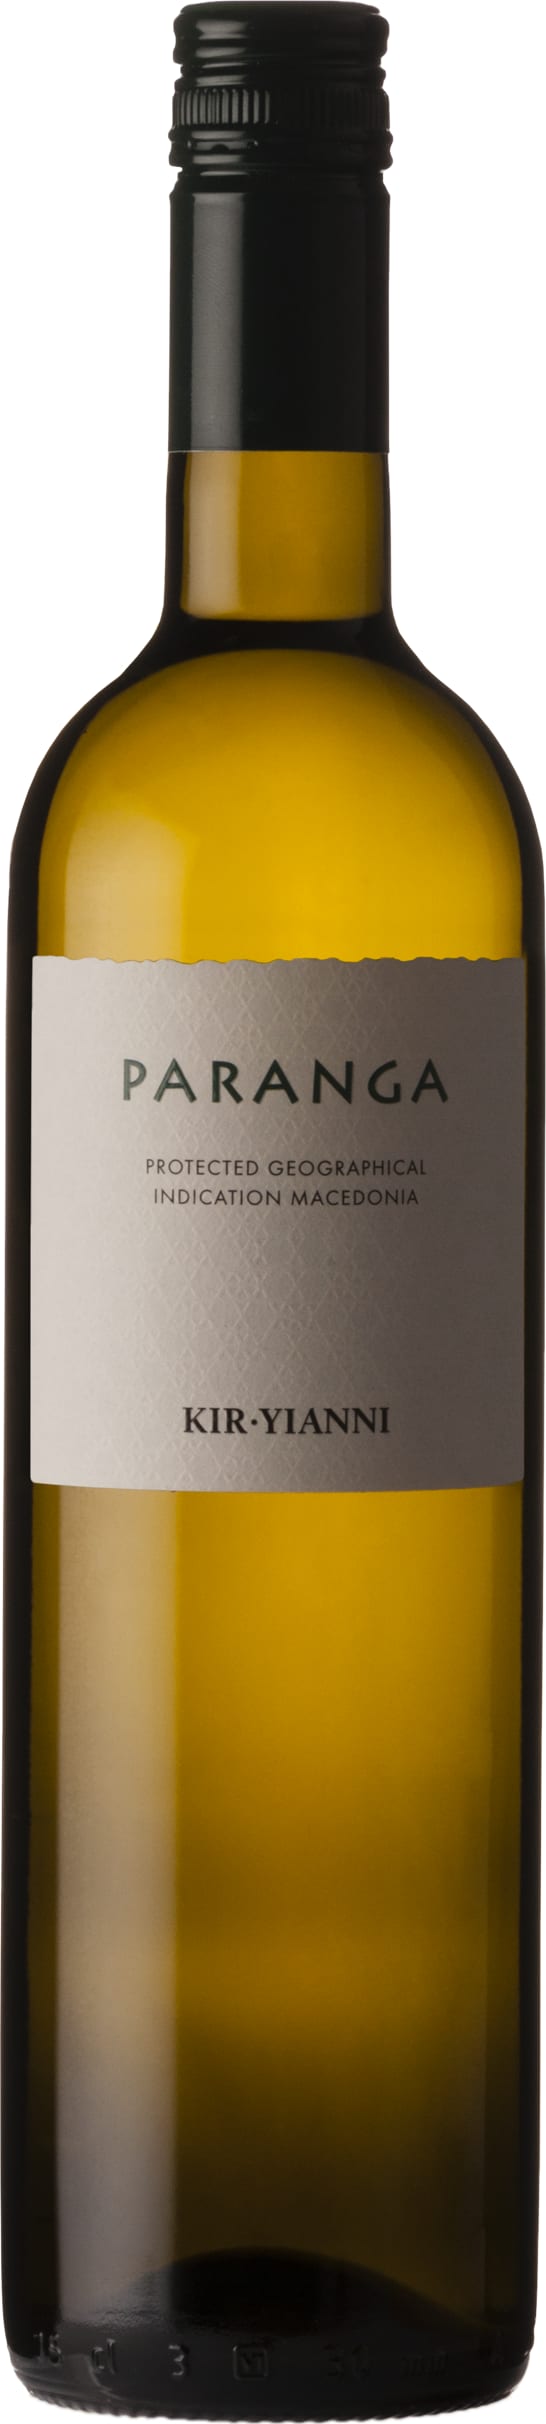 Kir-Yianni Paranga White 2022 75cl - Buy Kir-Yianni Wines from GREAT WINES DIRECT wine shop